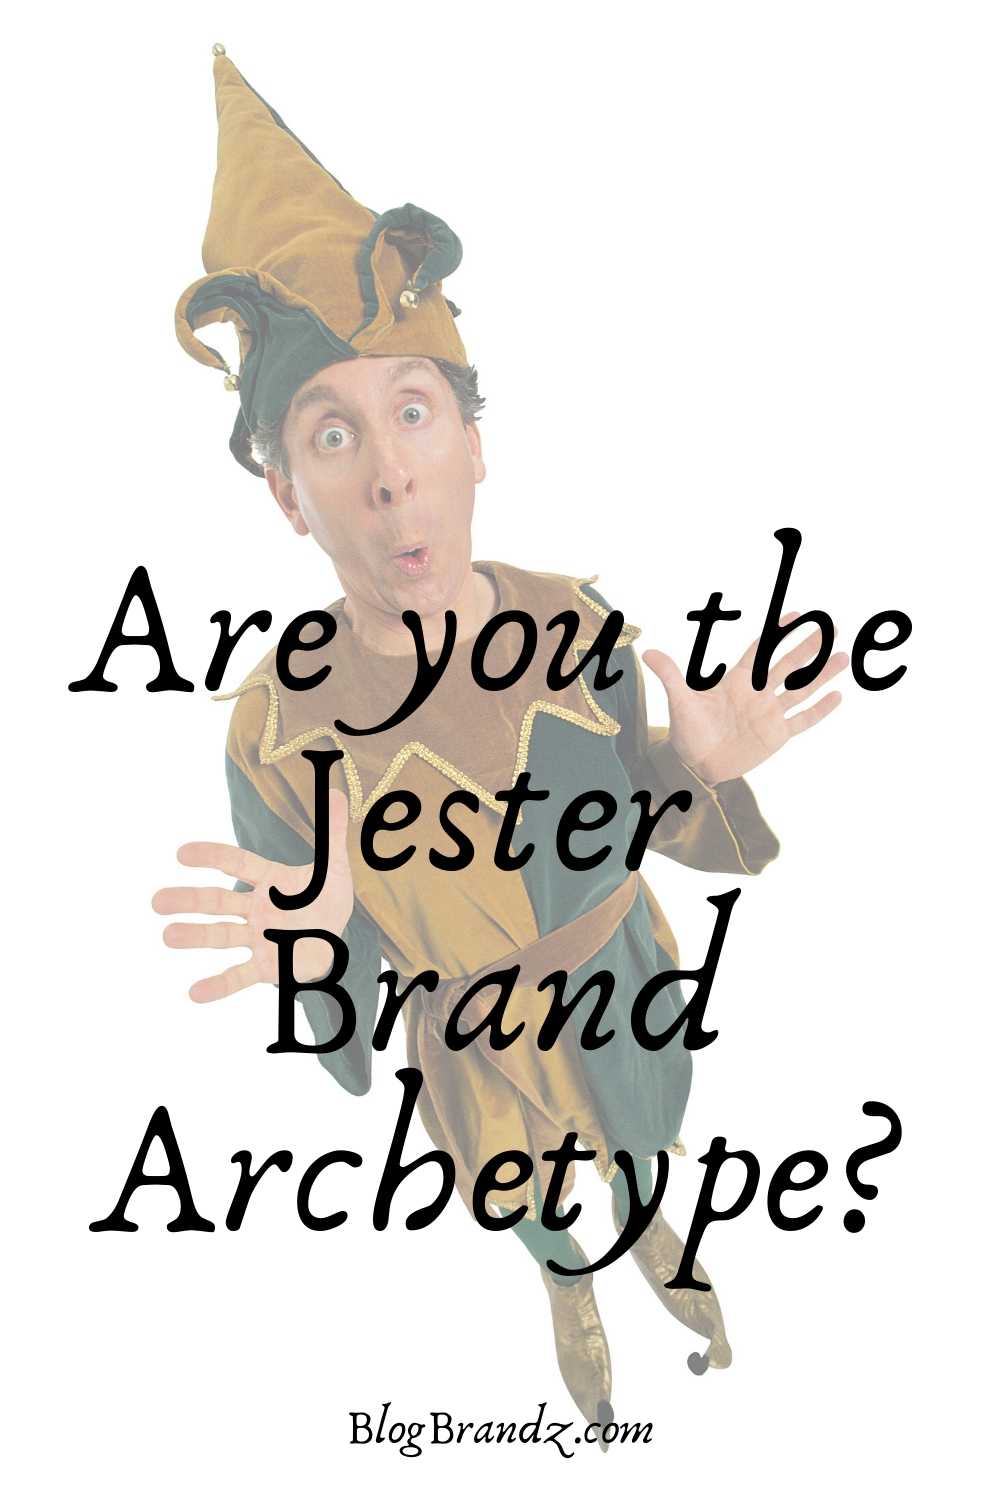 Brand Archetype Jester